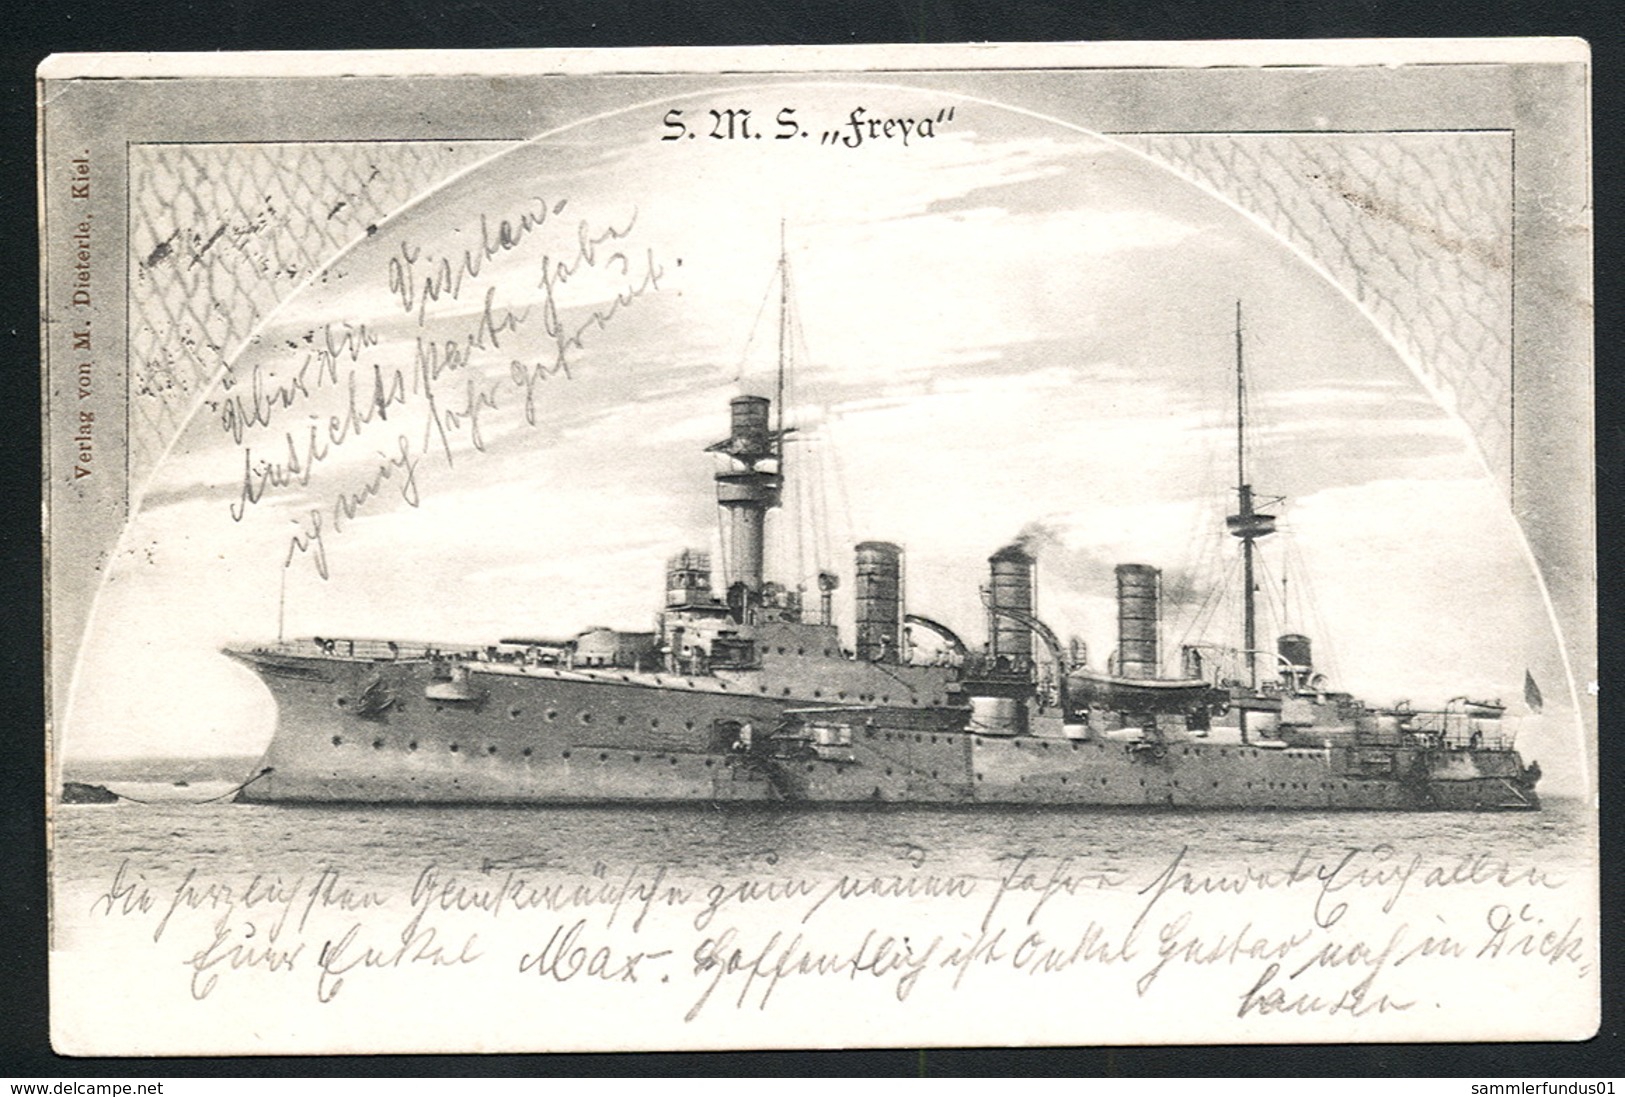 AK/CP Kaiserliche Marine  SMS Freya     Gel/circ. 1900   Erhaltung/Cond. 2-  Nr. 00470 - Guerre